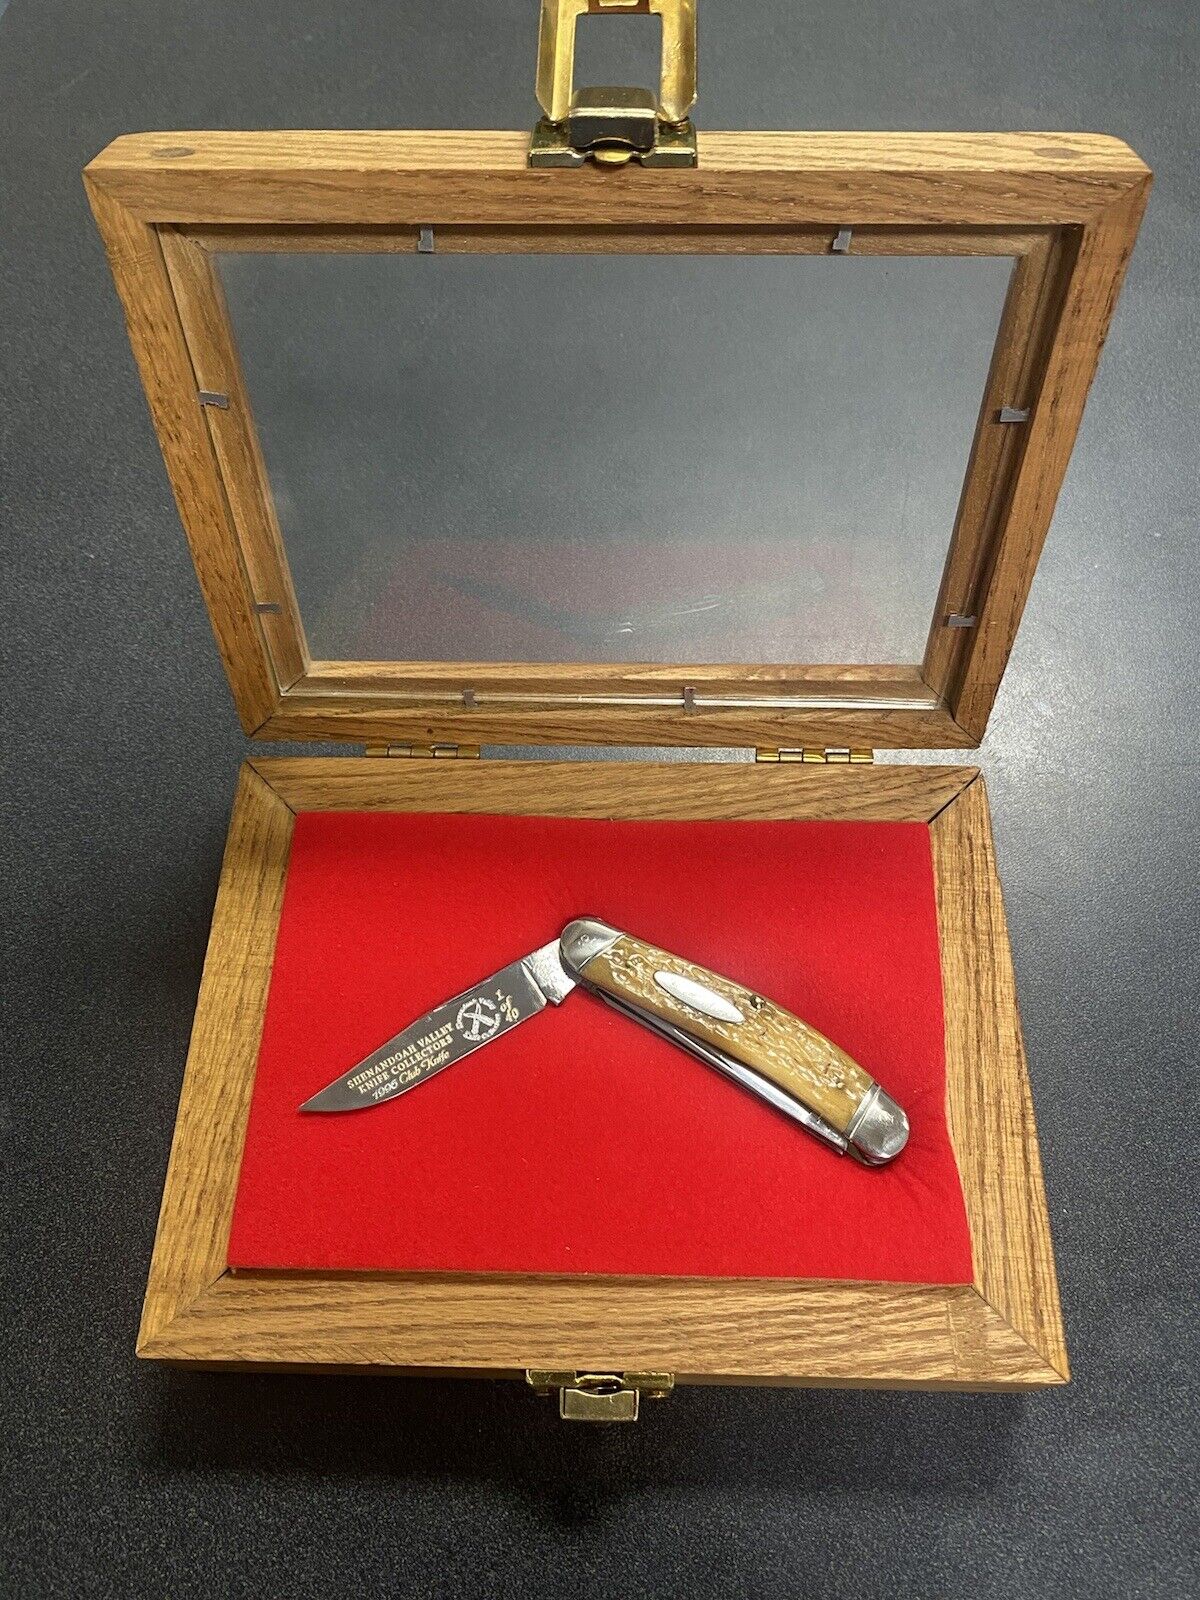 Bulldog Knife 36 Shenandoah Valley Knife Collectors 1996 In Nice Display Case